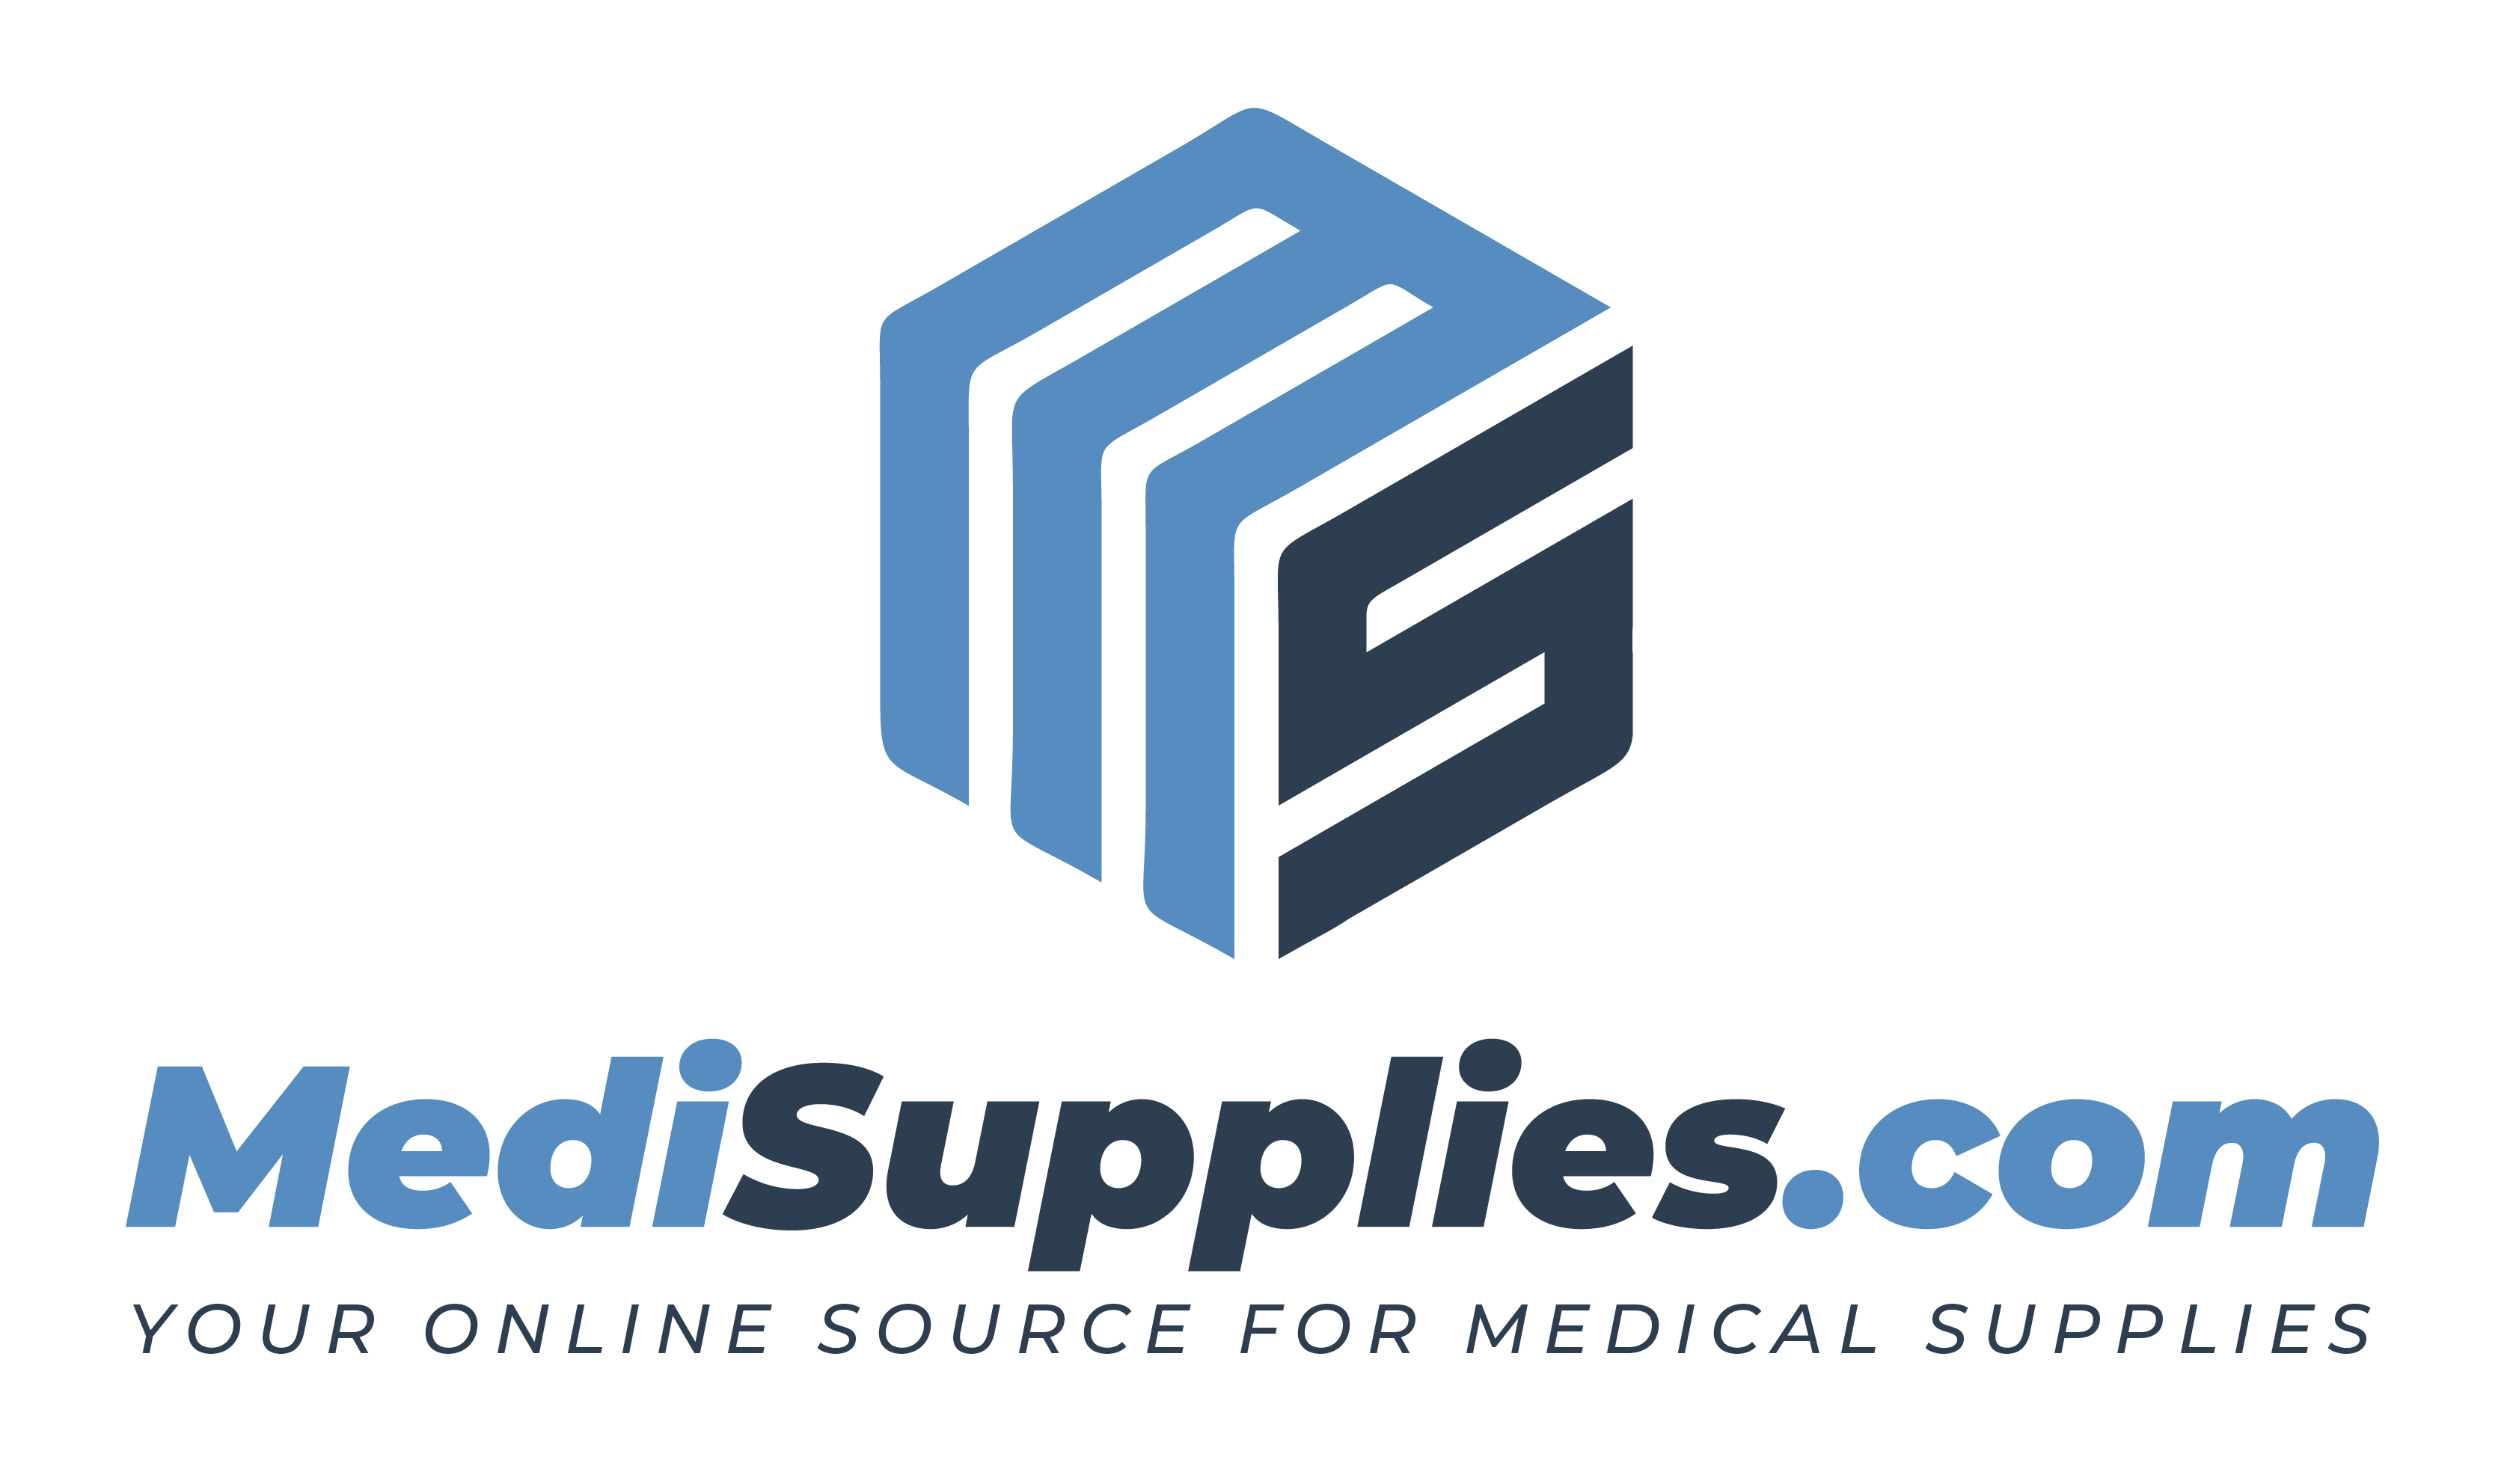 MediSupplies.com